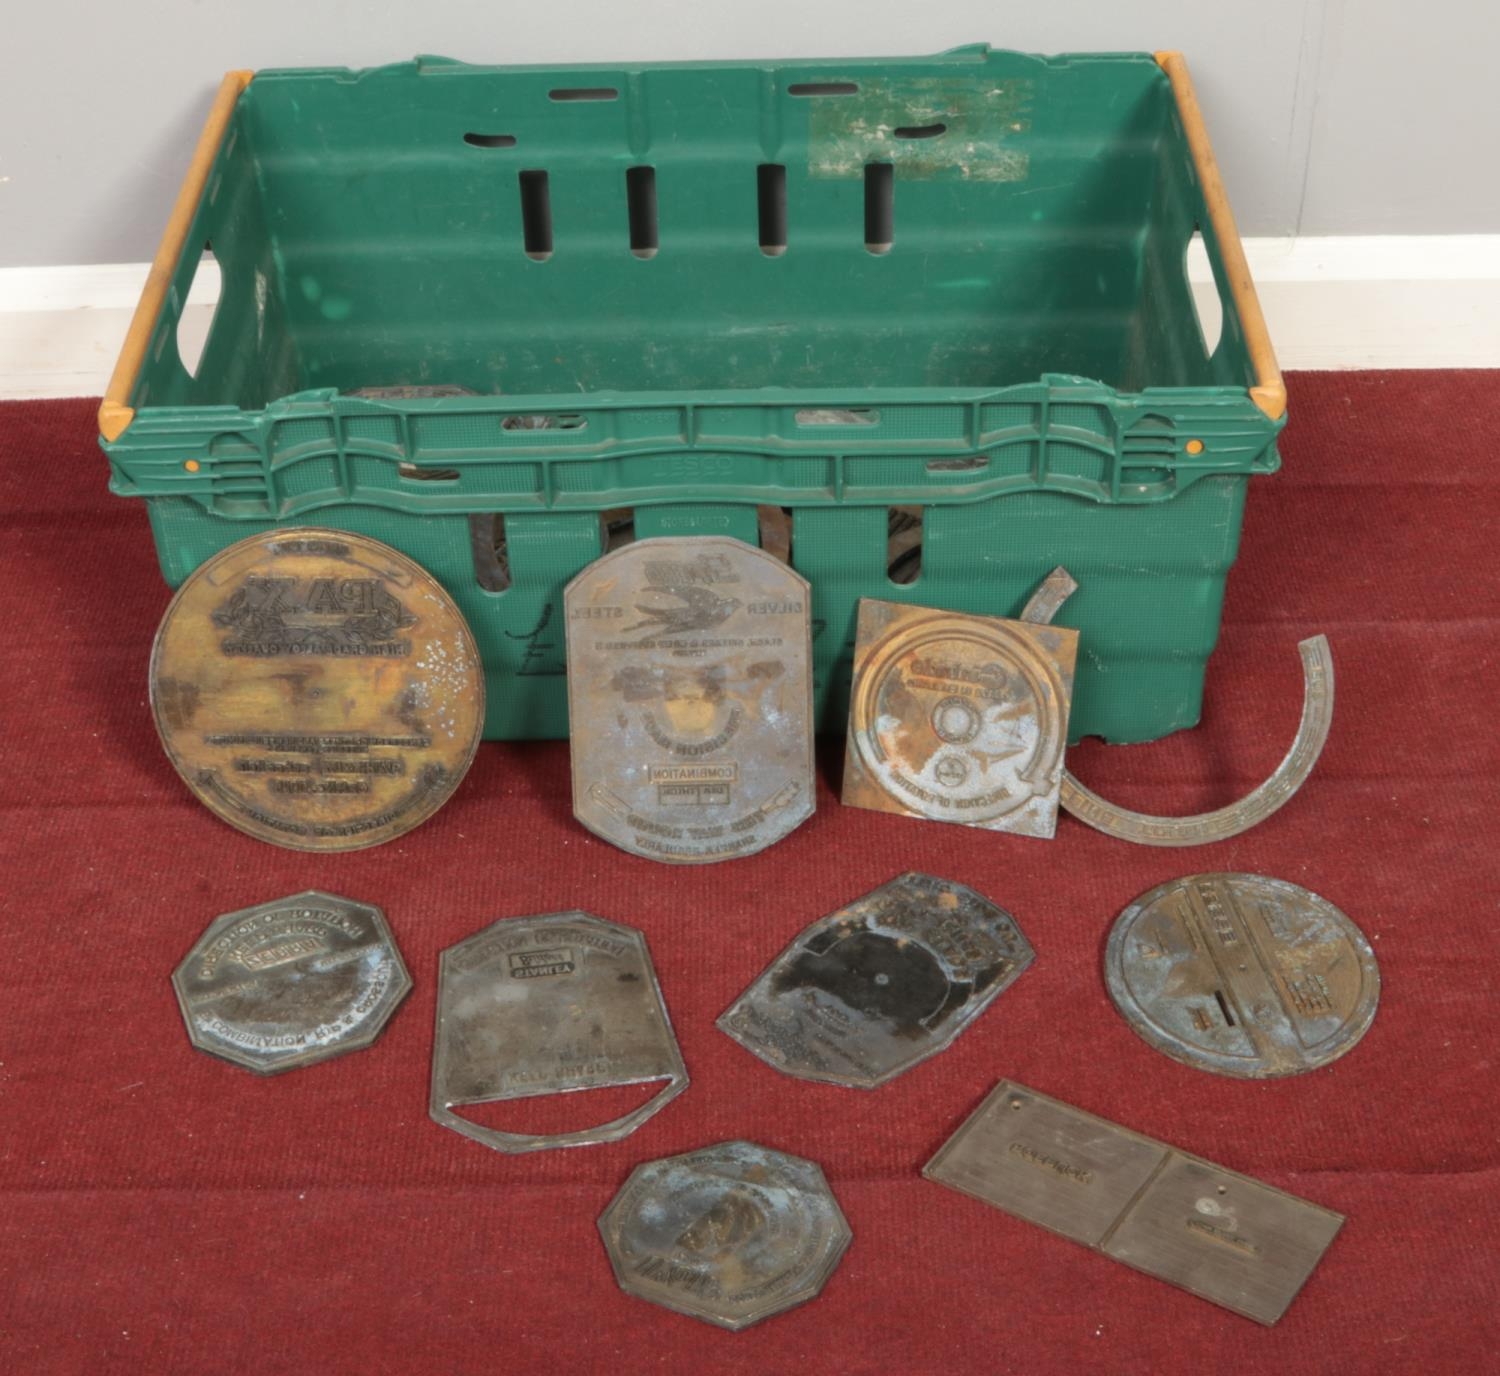 A box of assorted metal printing dye's. Black & decker, Picador etc